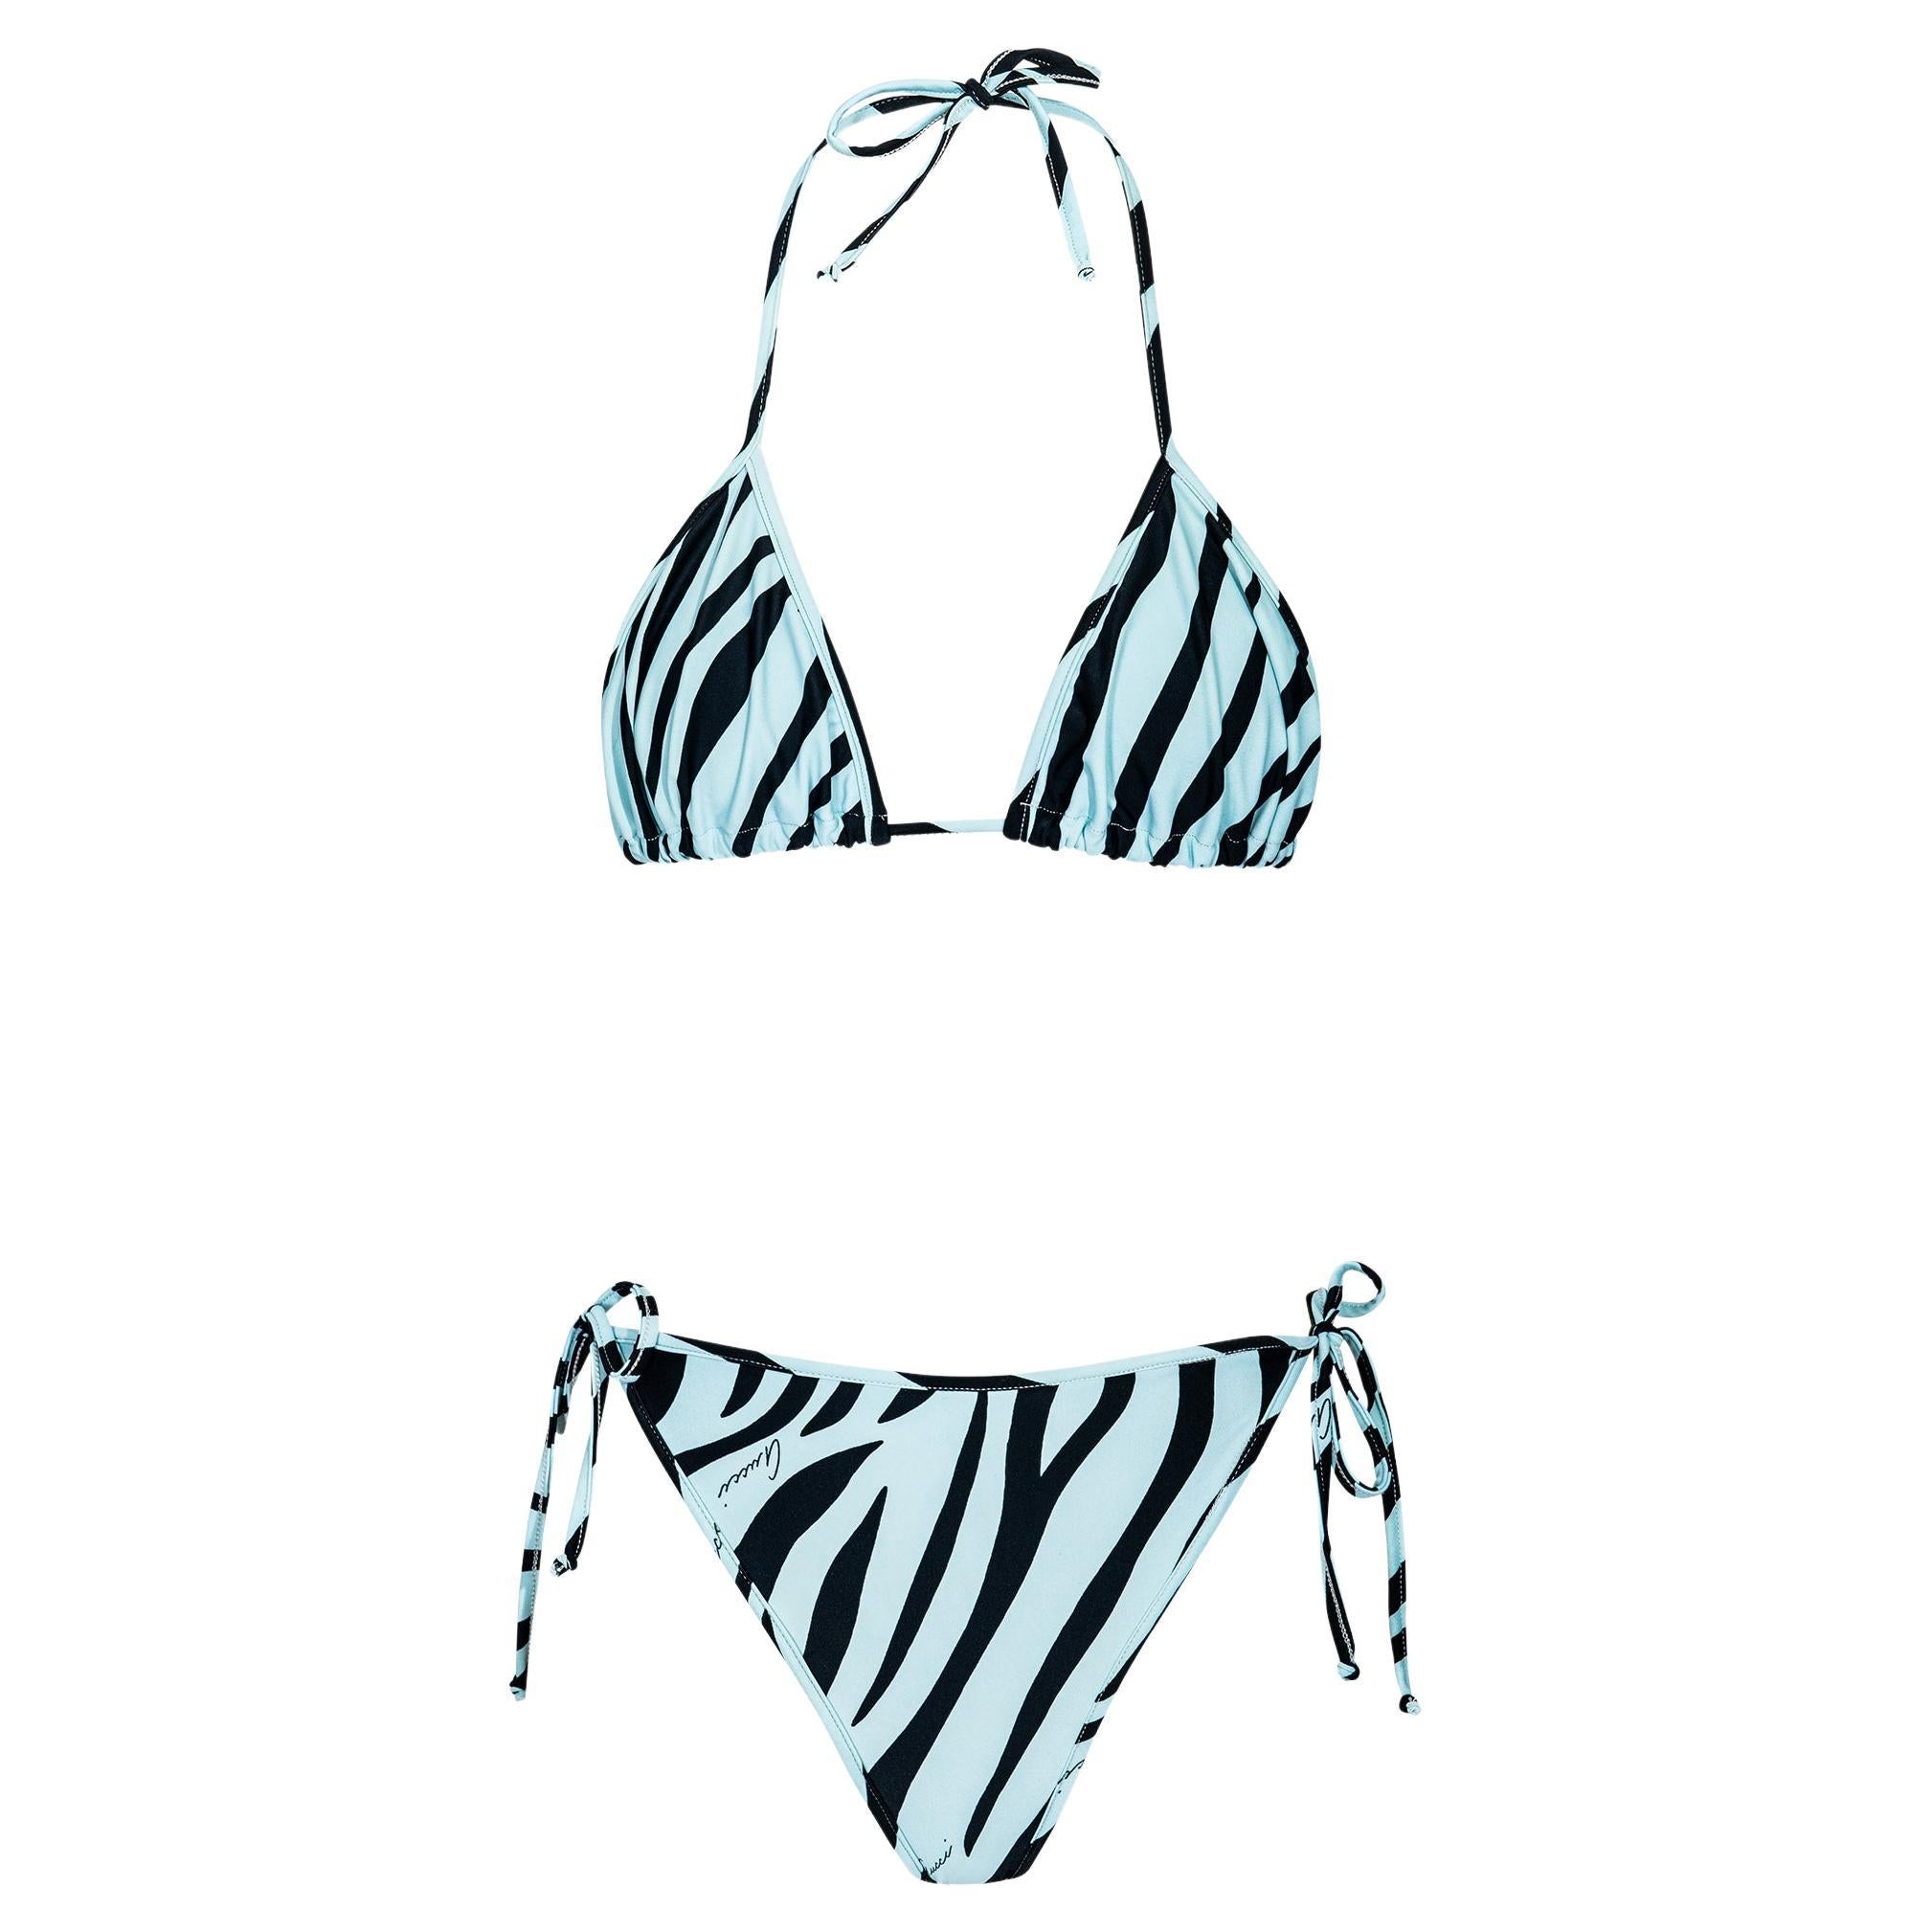 S/S 1996 Gucci by Tom Ford Blue and Black Zebra Print String Bikini For Sale